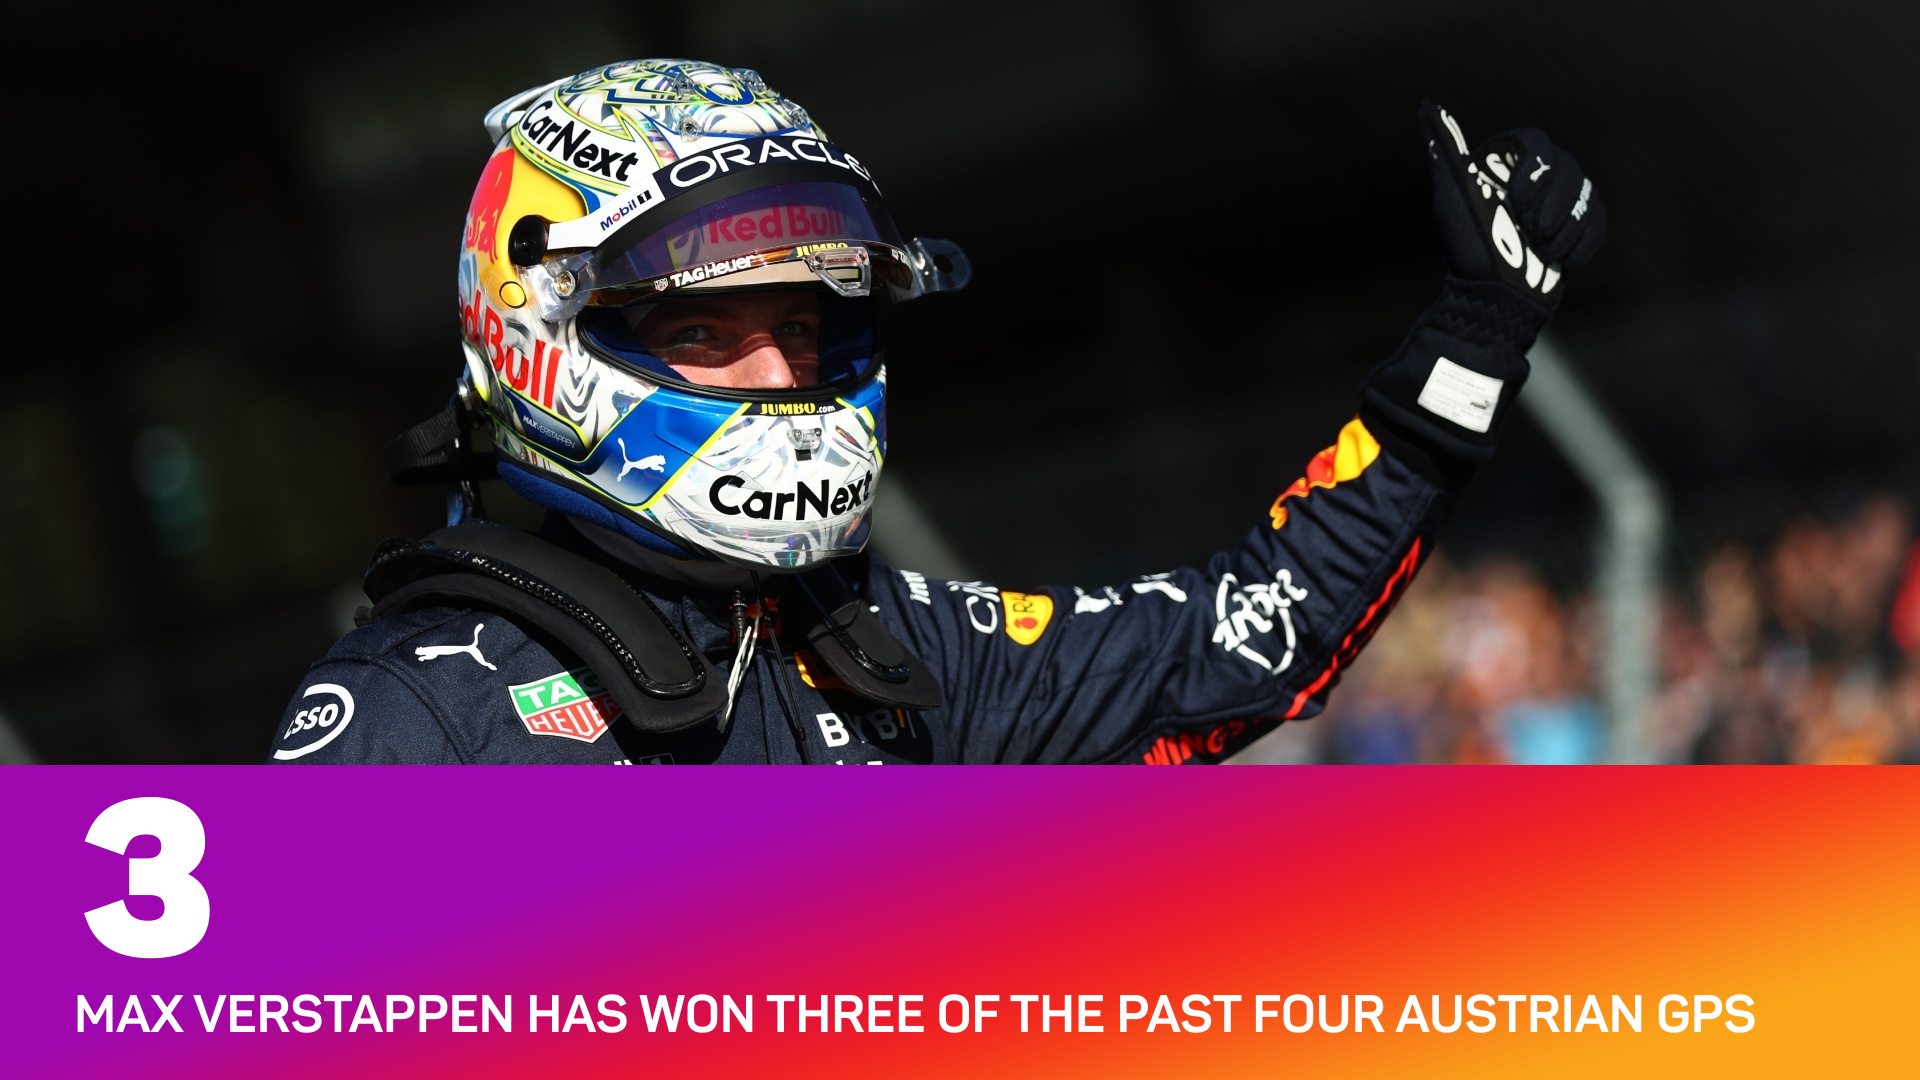 Max Verstappen has won three of the past four Austrian GPs